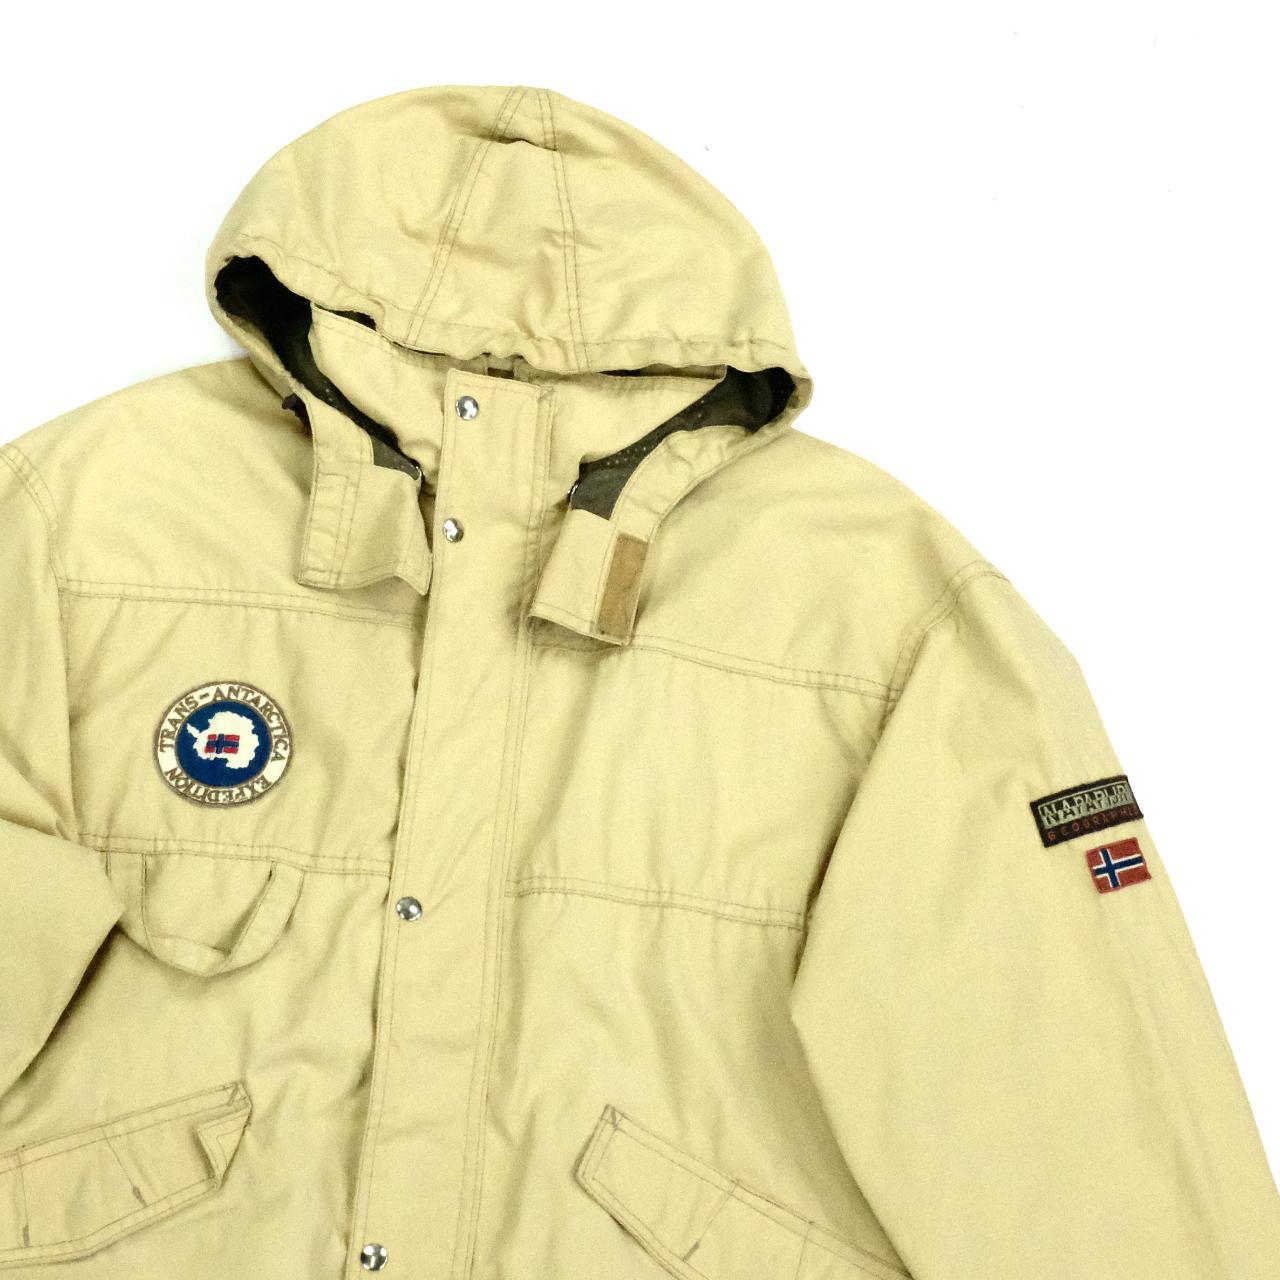 Vintage Napapijri jacket